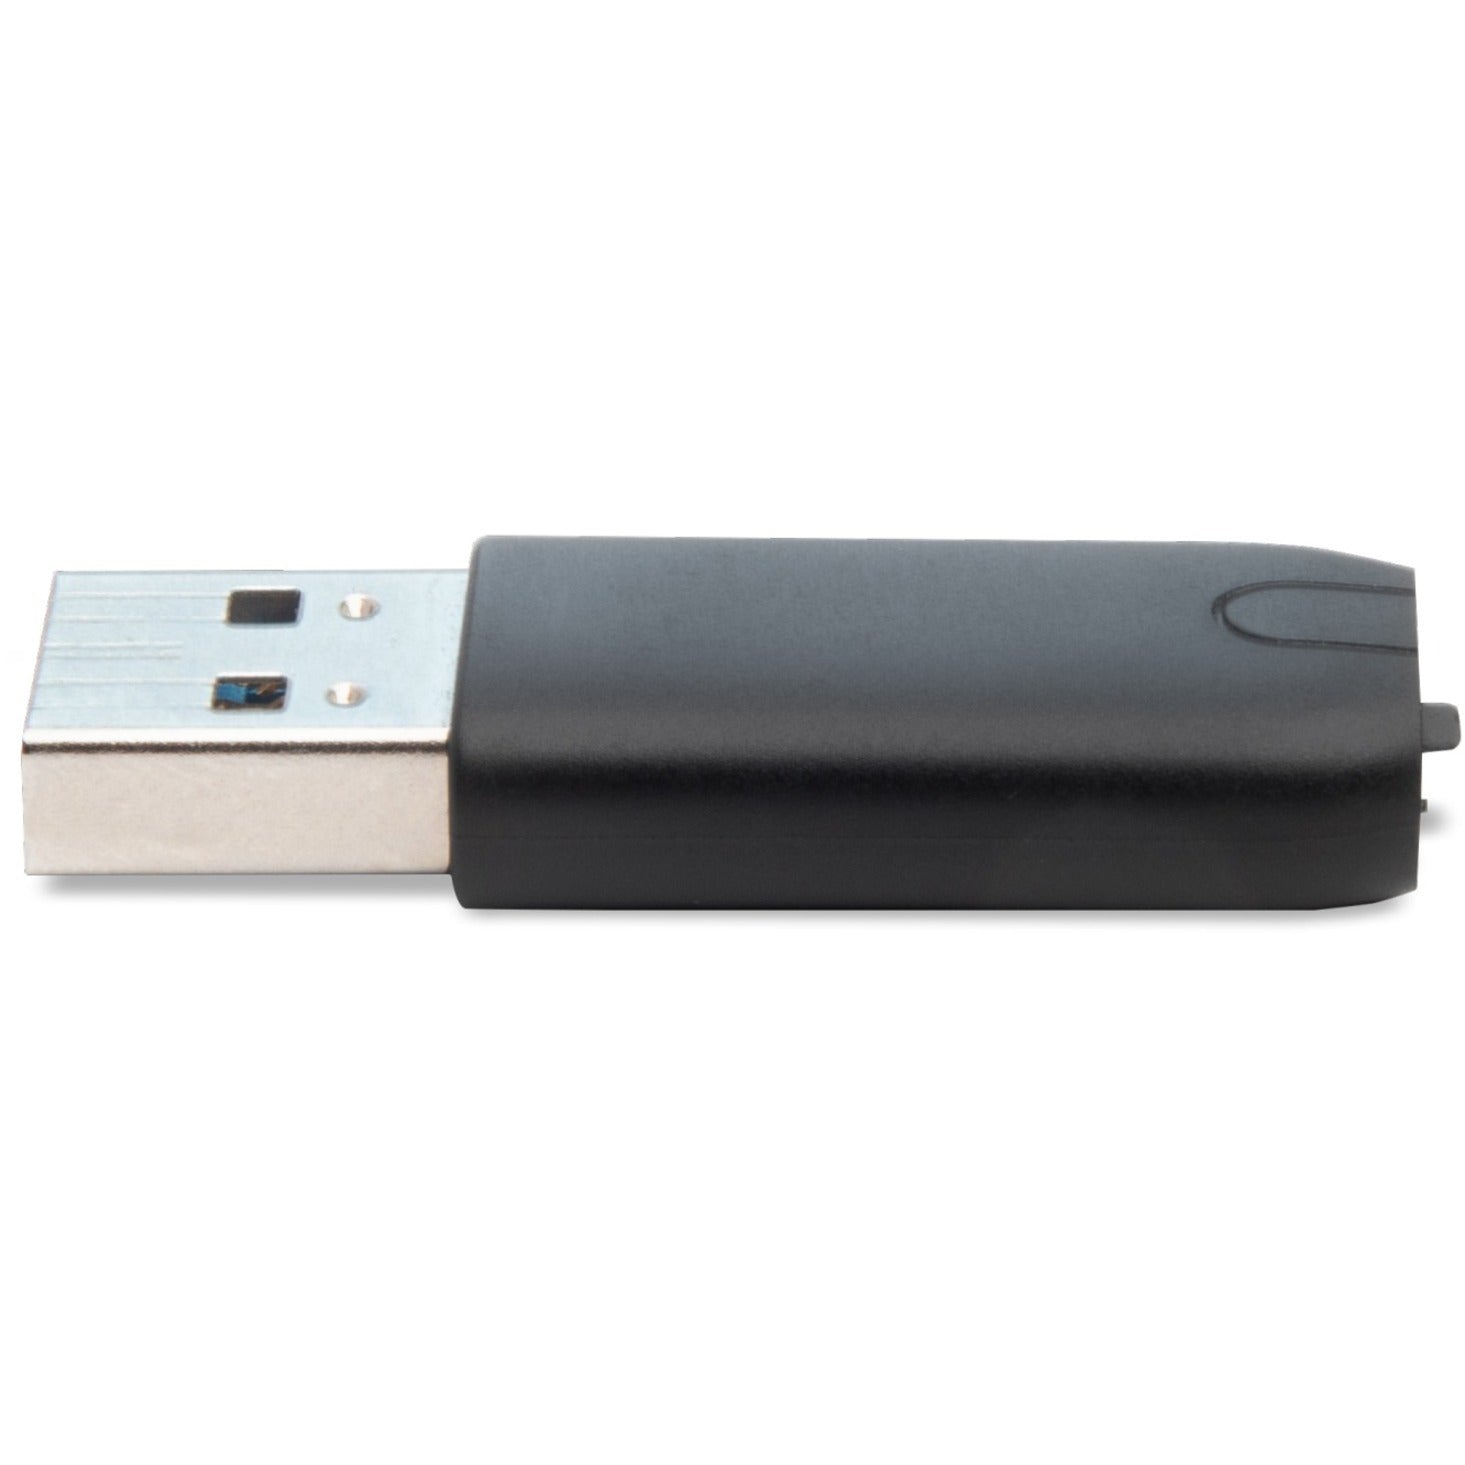 Crucial CTUSBCFUSBAMAD USB-C zu USB-A Adapter Datenübertragungsadapter